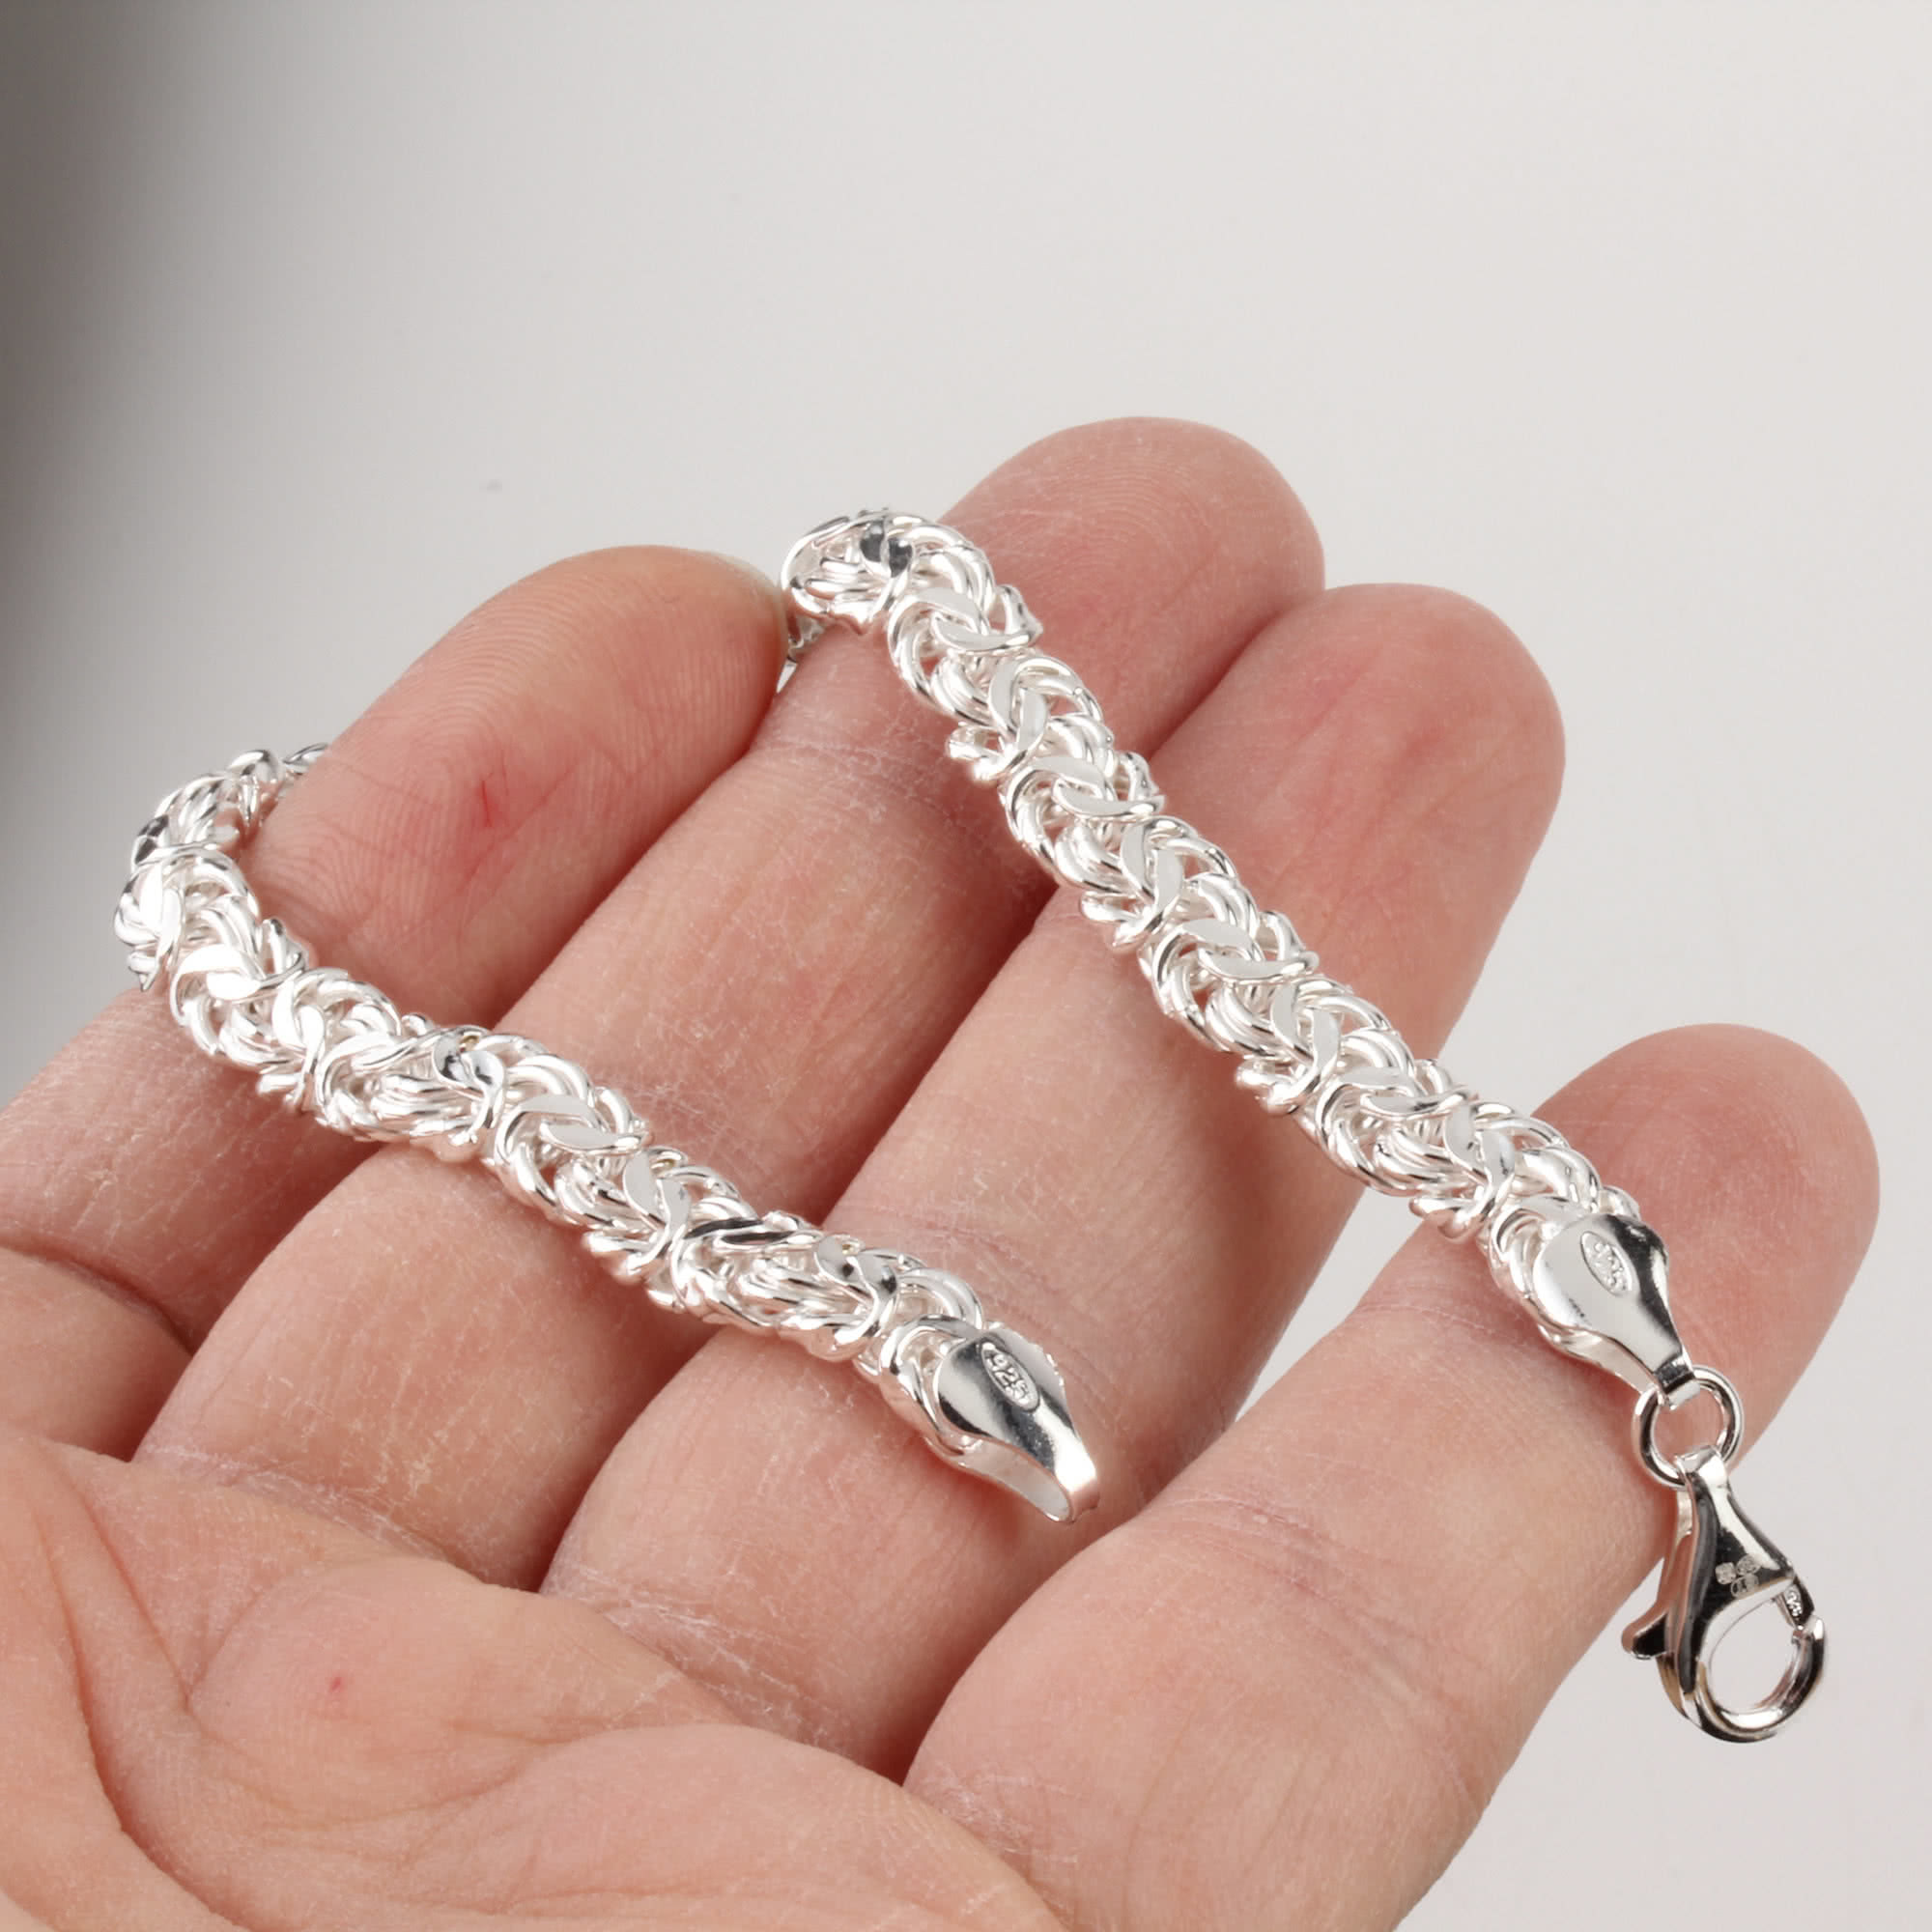 Ladies Byzantine Diamond Cut Bracelet shown close up in hand